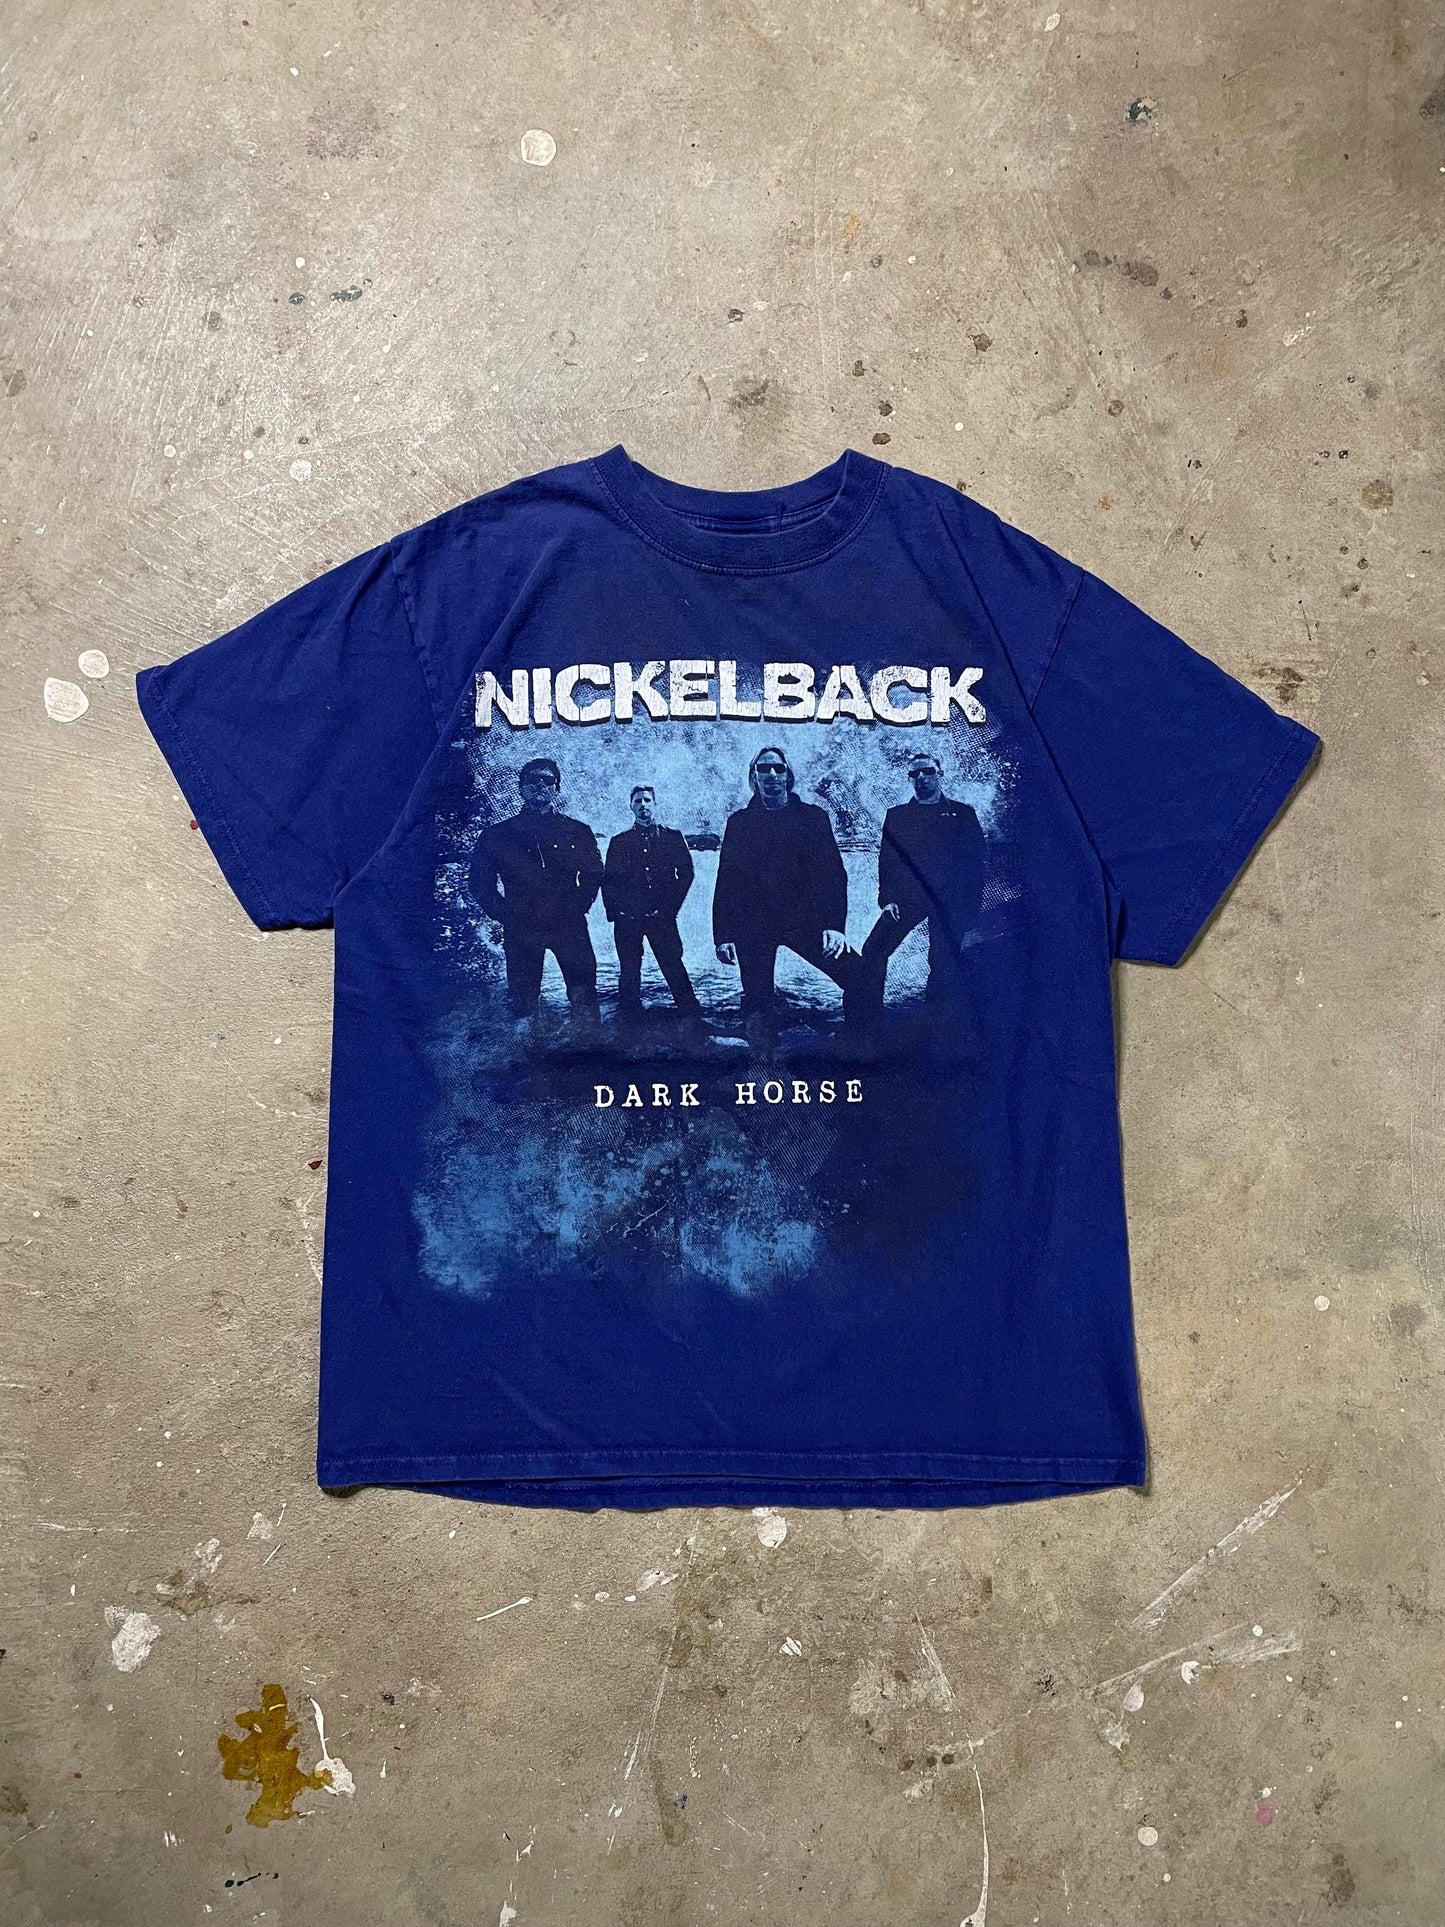 2008 Nickelback Dark Horse Tour Tee